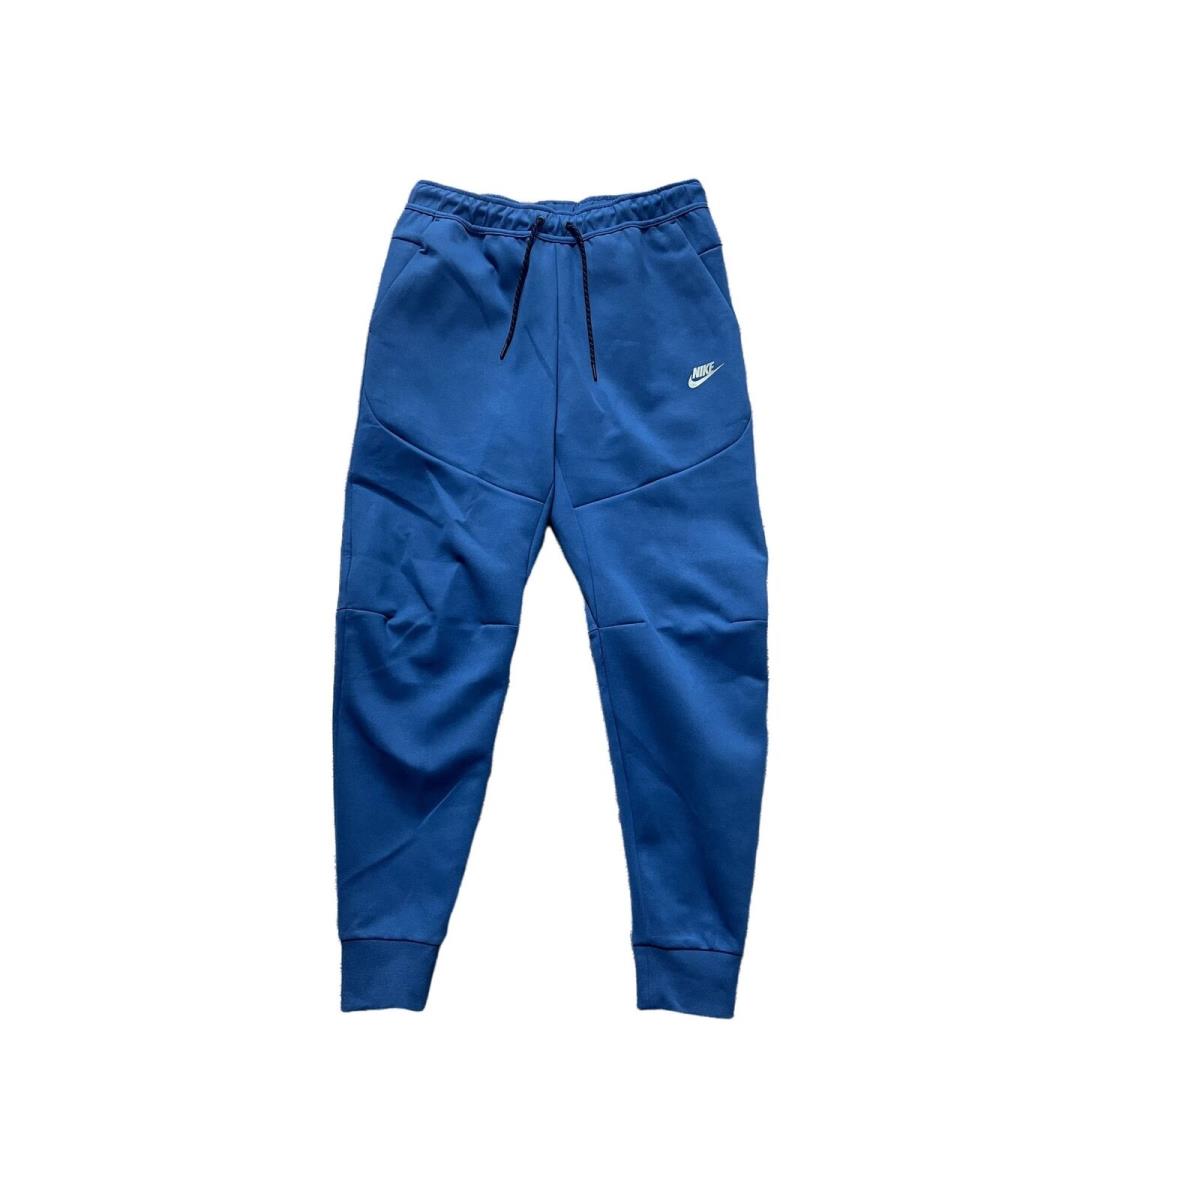 Nike Nsw Tech Fleece Pants Slim Fit Brushed Joggers Blue Mens 2XL DD4804 476